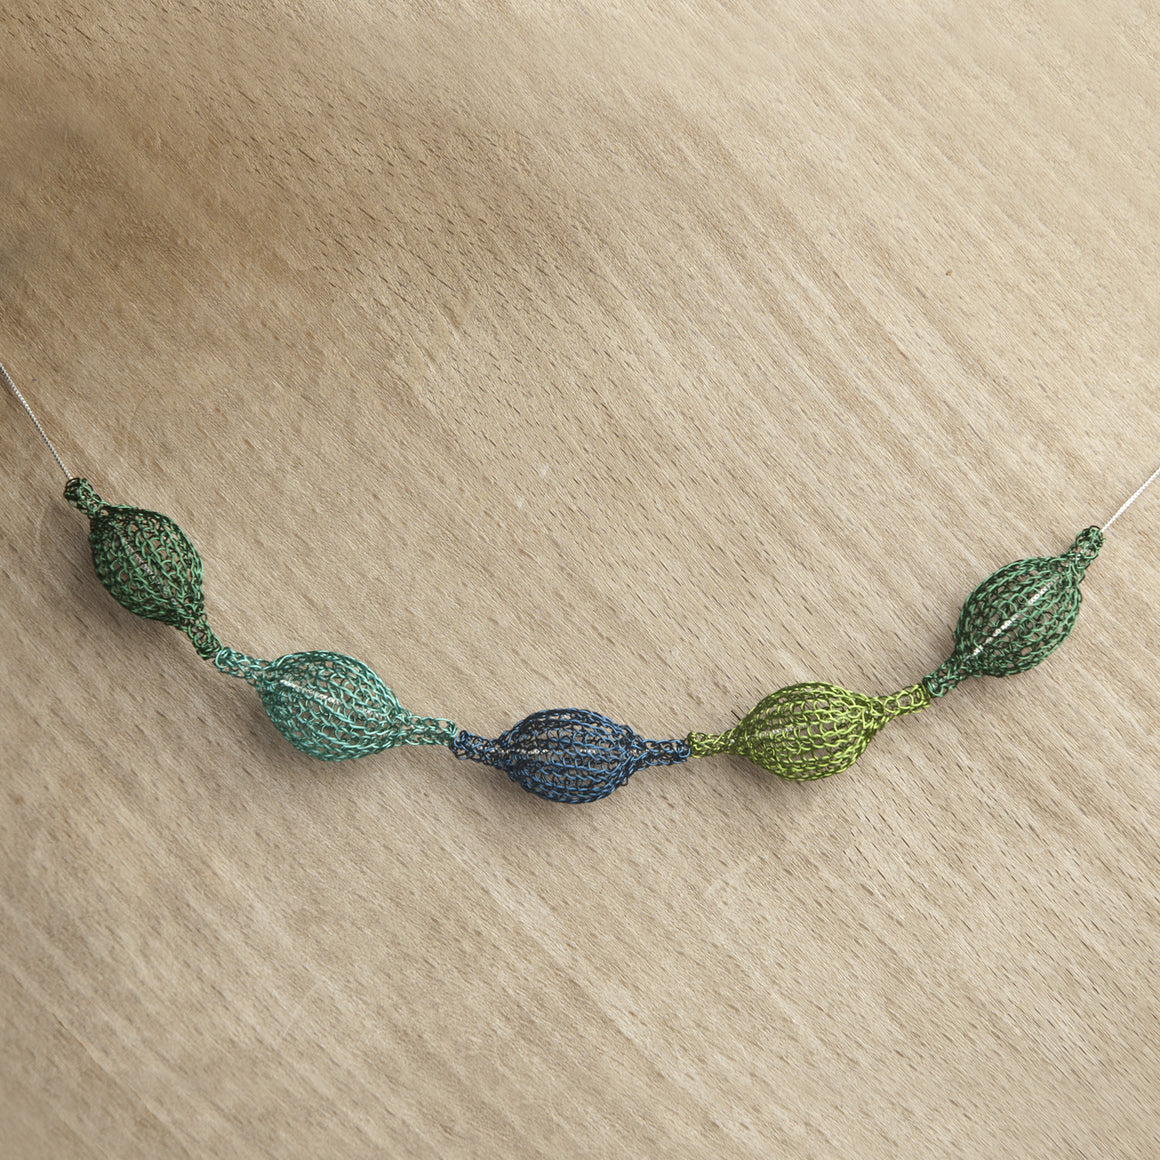 Wire Crochet Necklace - Cactus necklace - Yooladesign